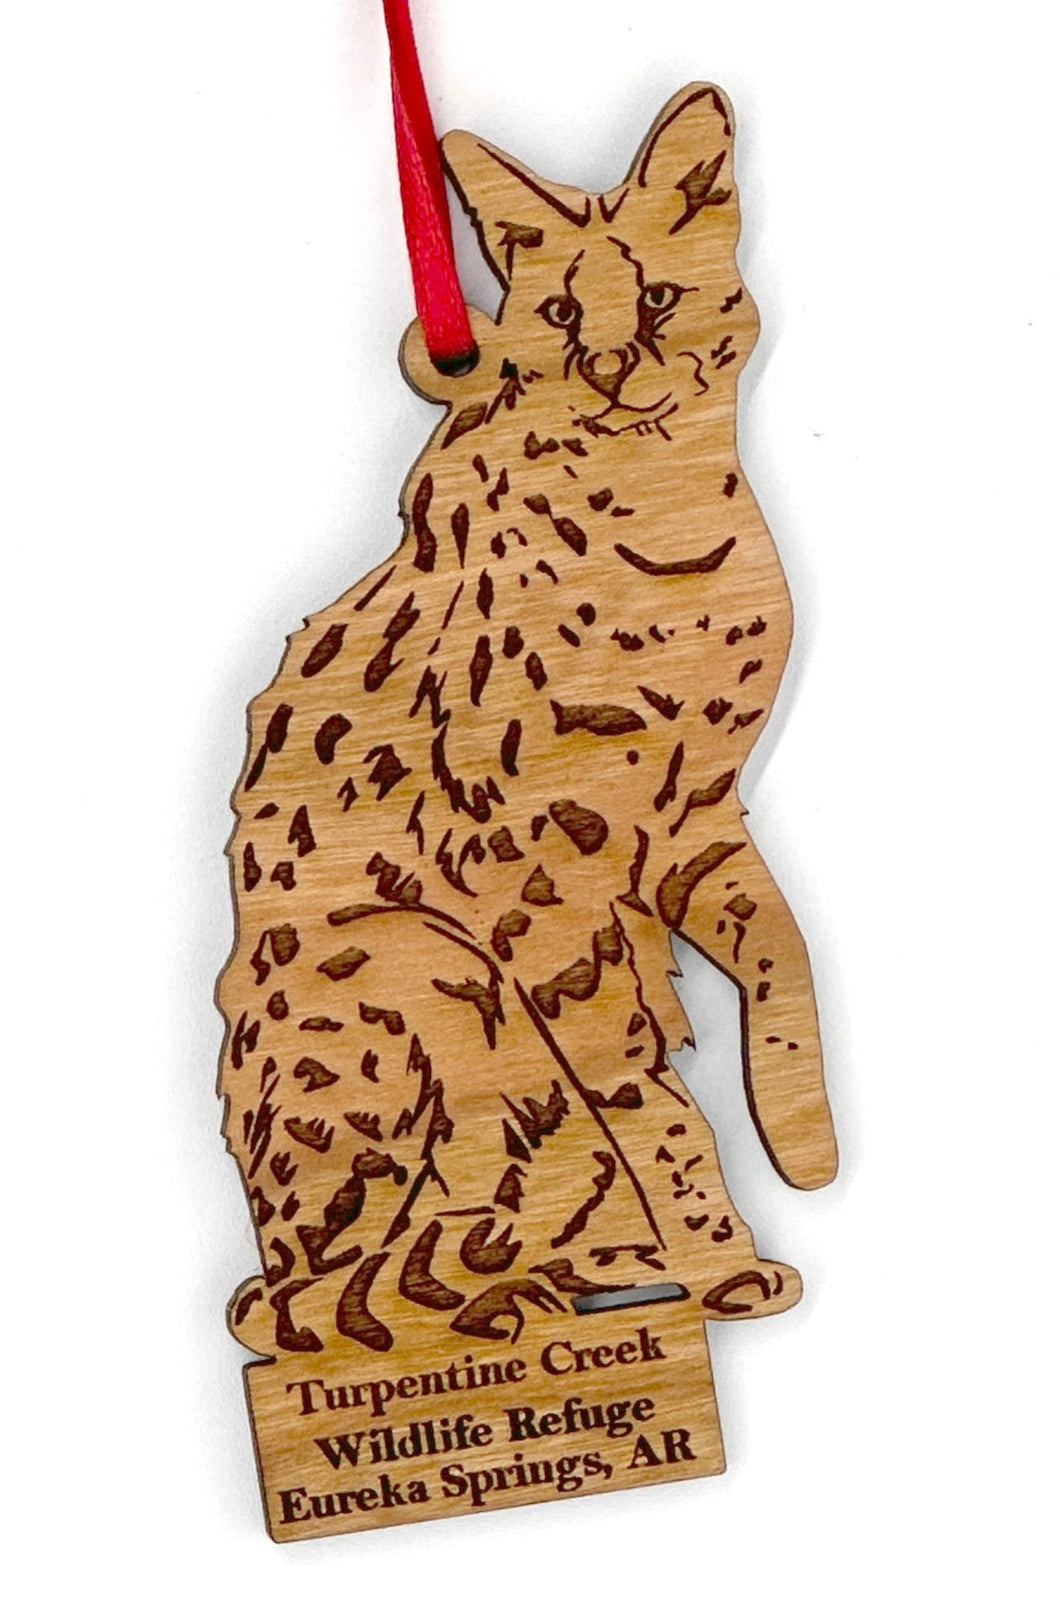 Wooden Laser-cut Serval Ornament